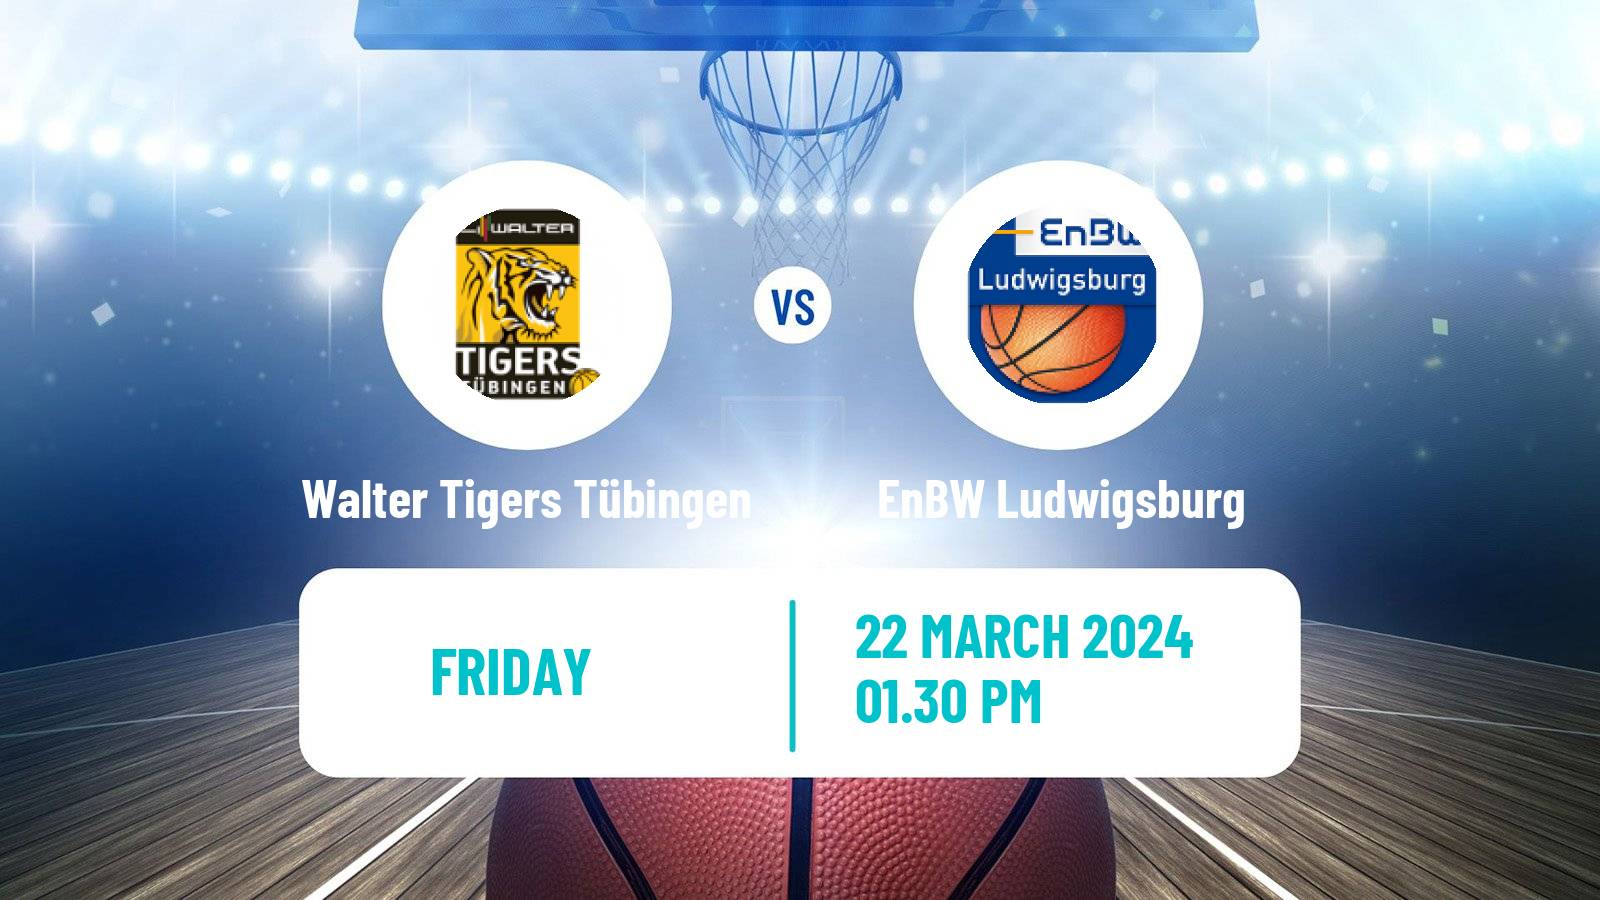 Basketball German BBL Walter Tigers Tübingen - EnBW Ludwigsburg